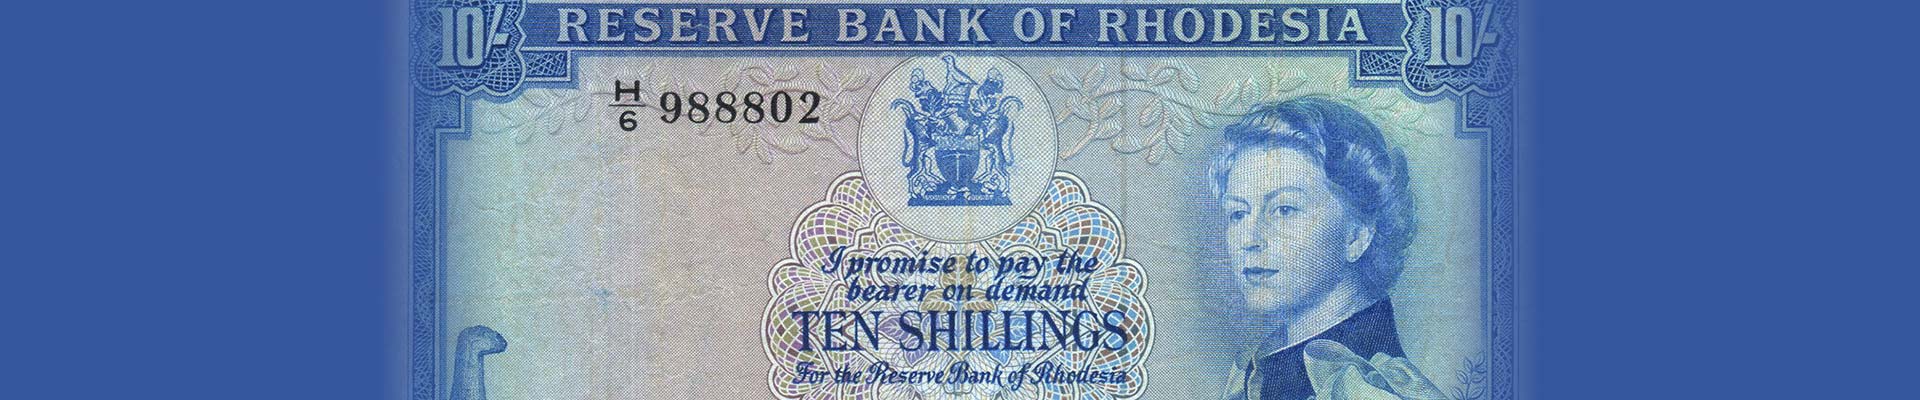 Banknotes and Bureaucratic Bungling header image